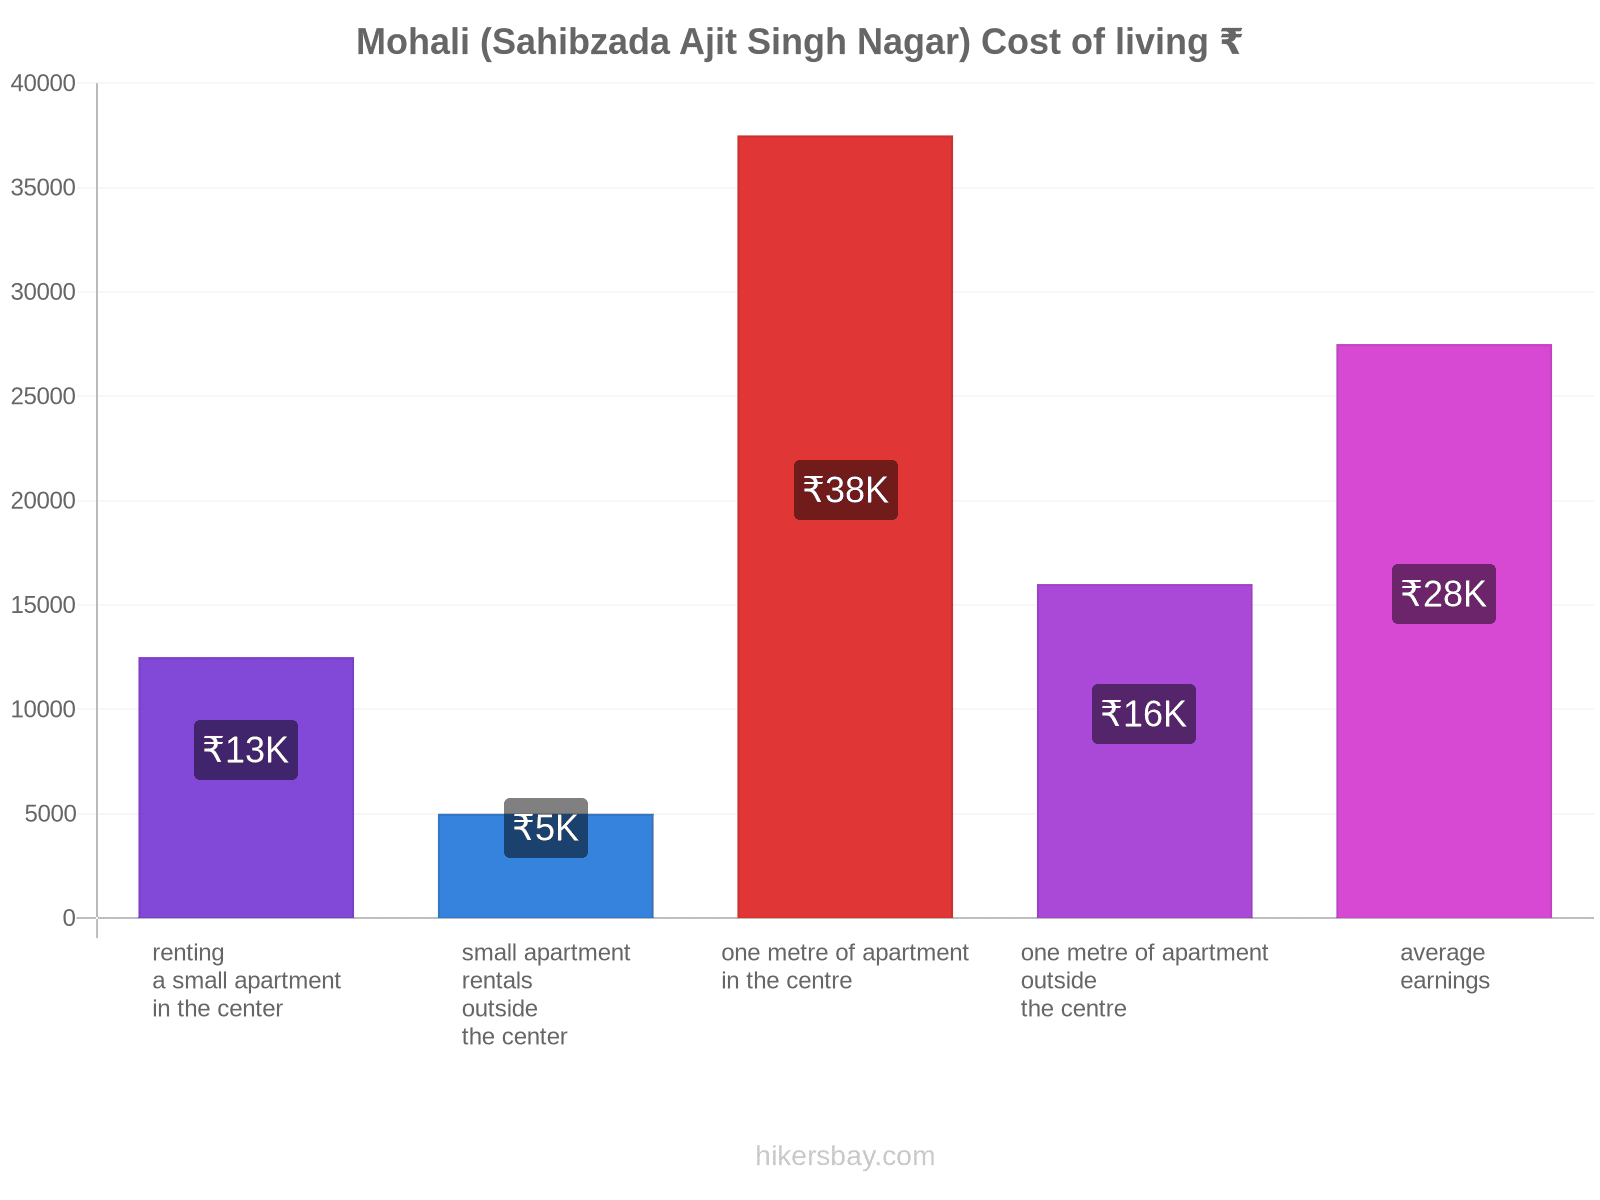 Mohali (Sahibzada Ajit Singh Nagar) cost of living hikersbay.com